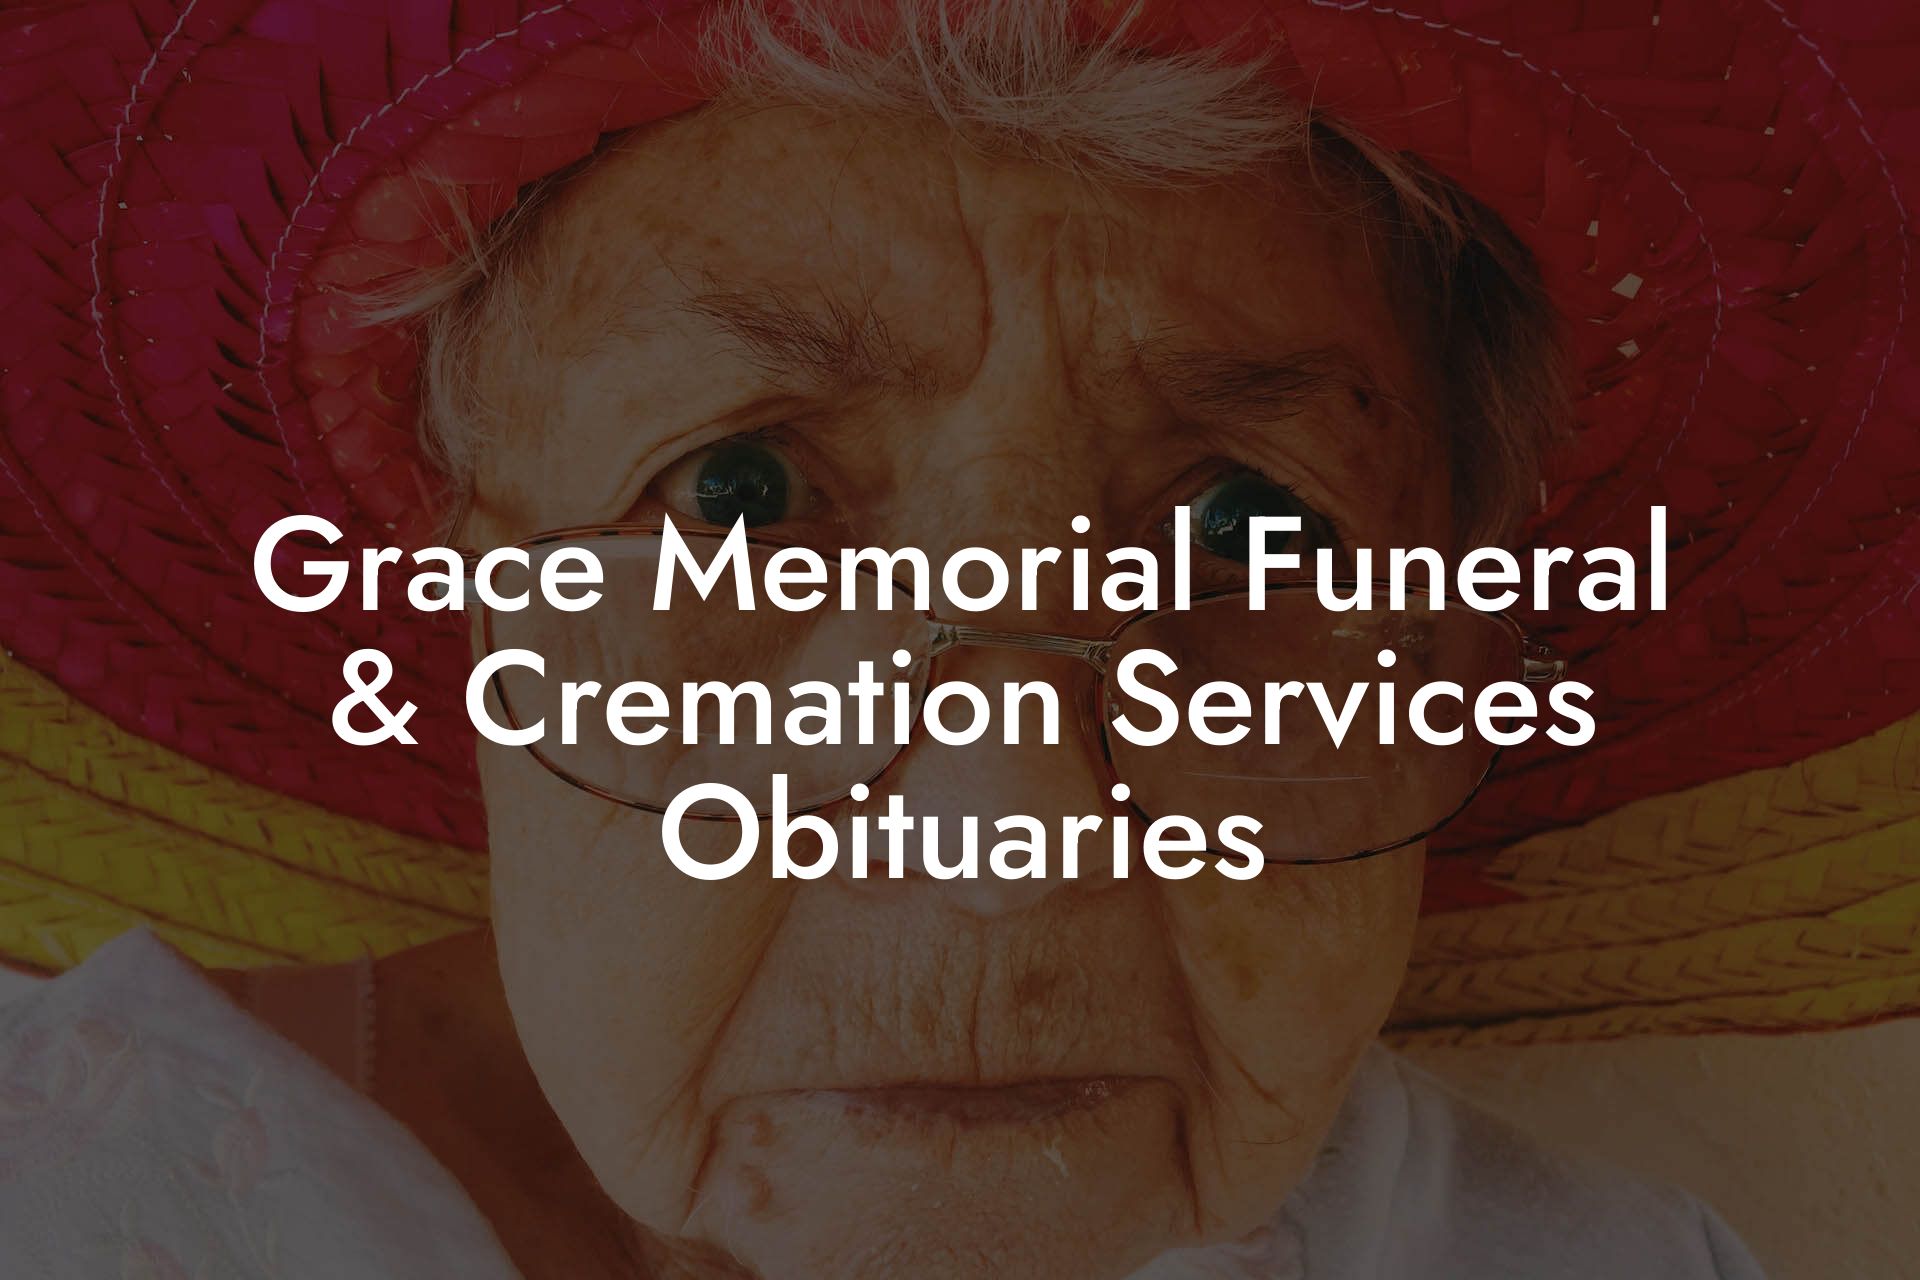 Grace Memorial Funeral & Cremation Services Obituaries